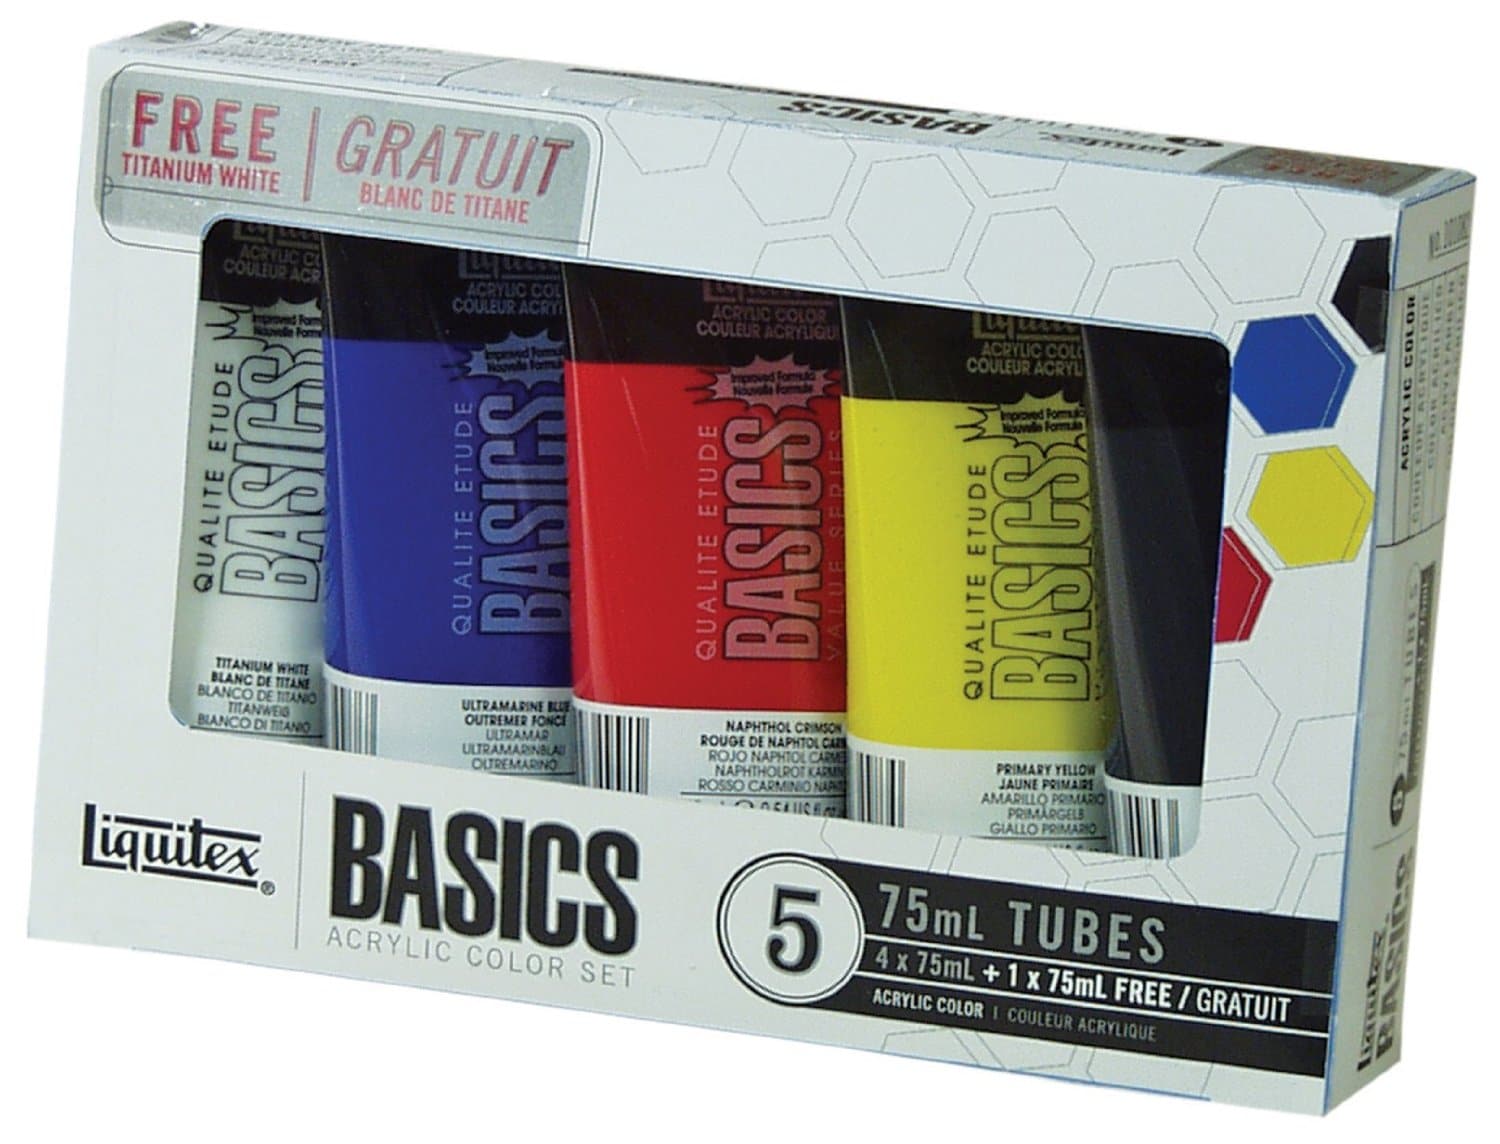 LIGHTNING DEAL ALERT! Liquitex Basics Acrylic Color Set, 4-pack – 50% off